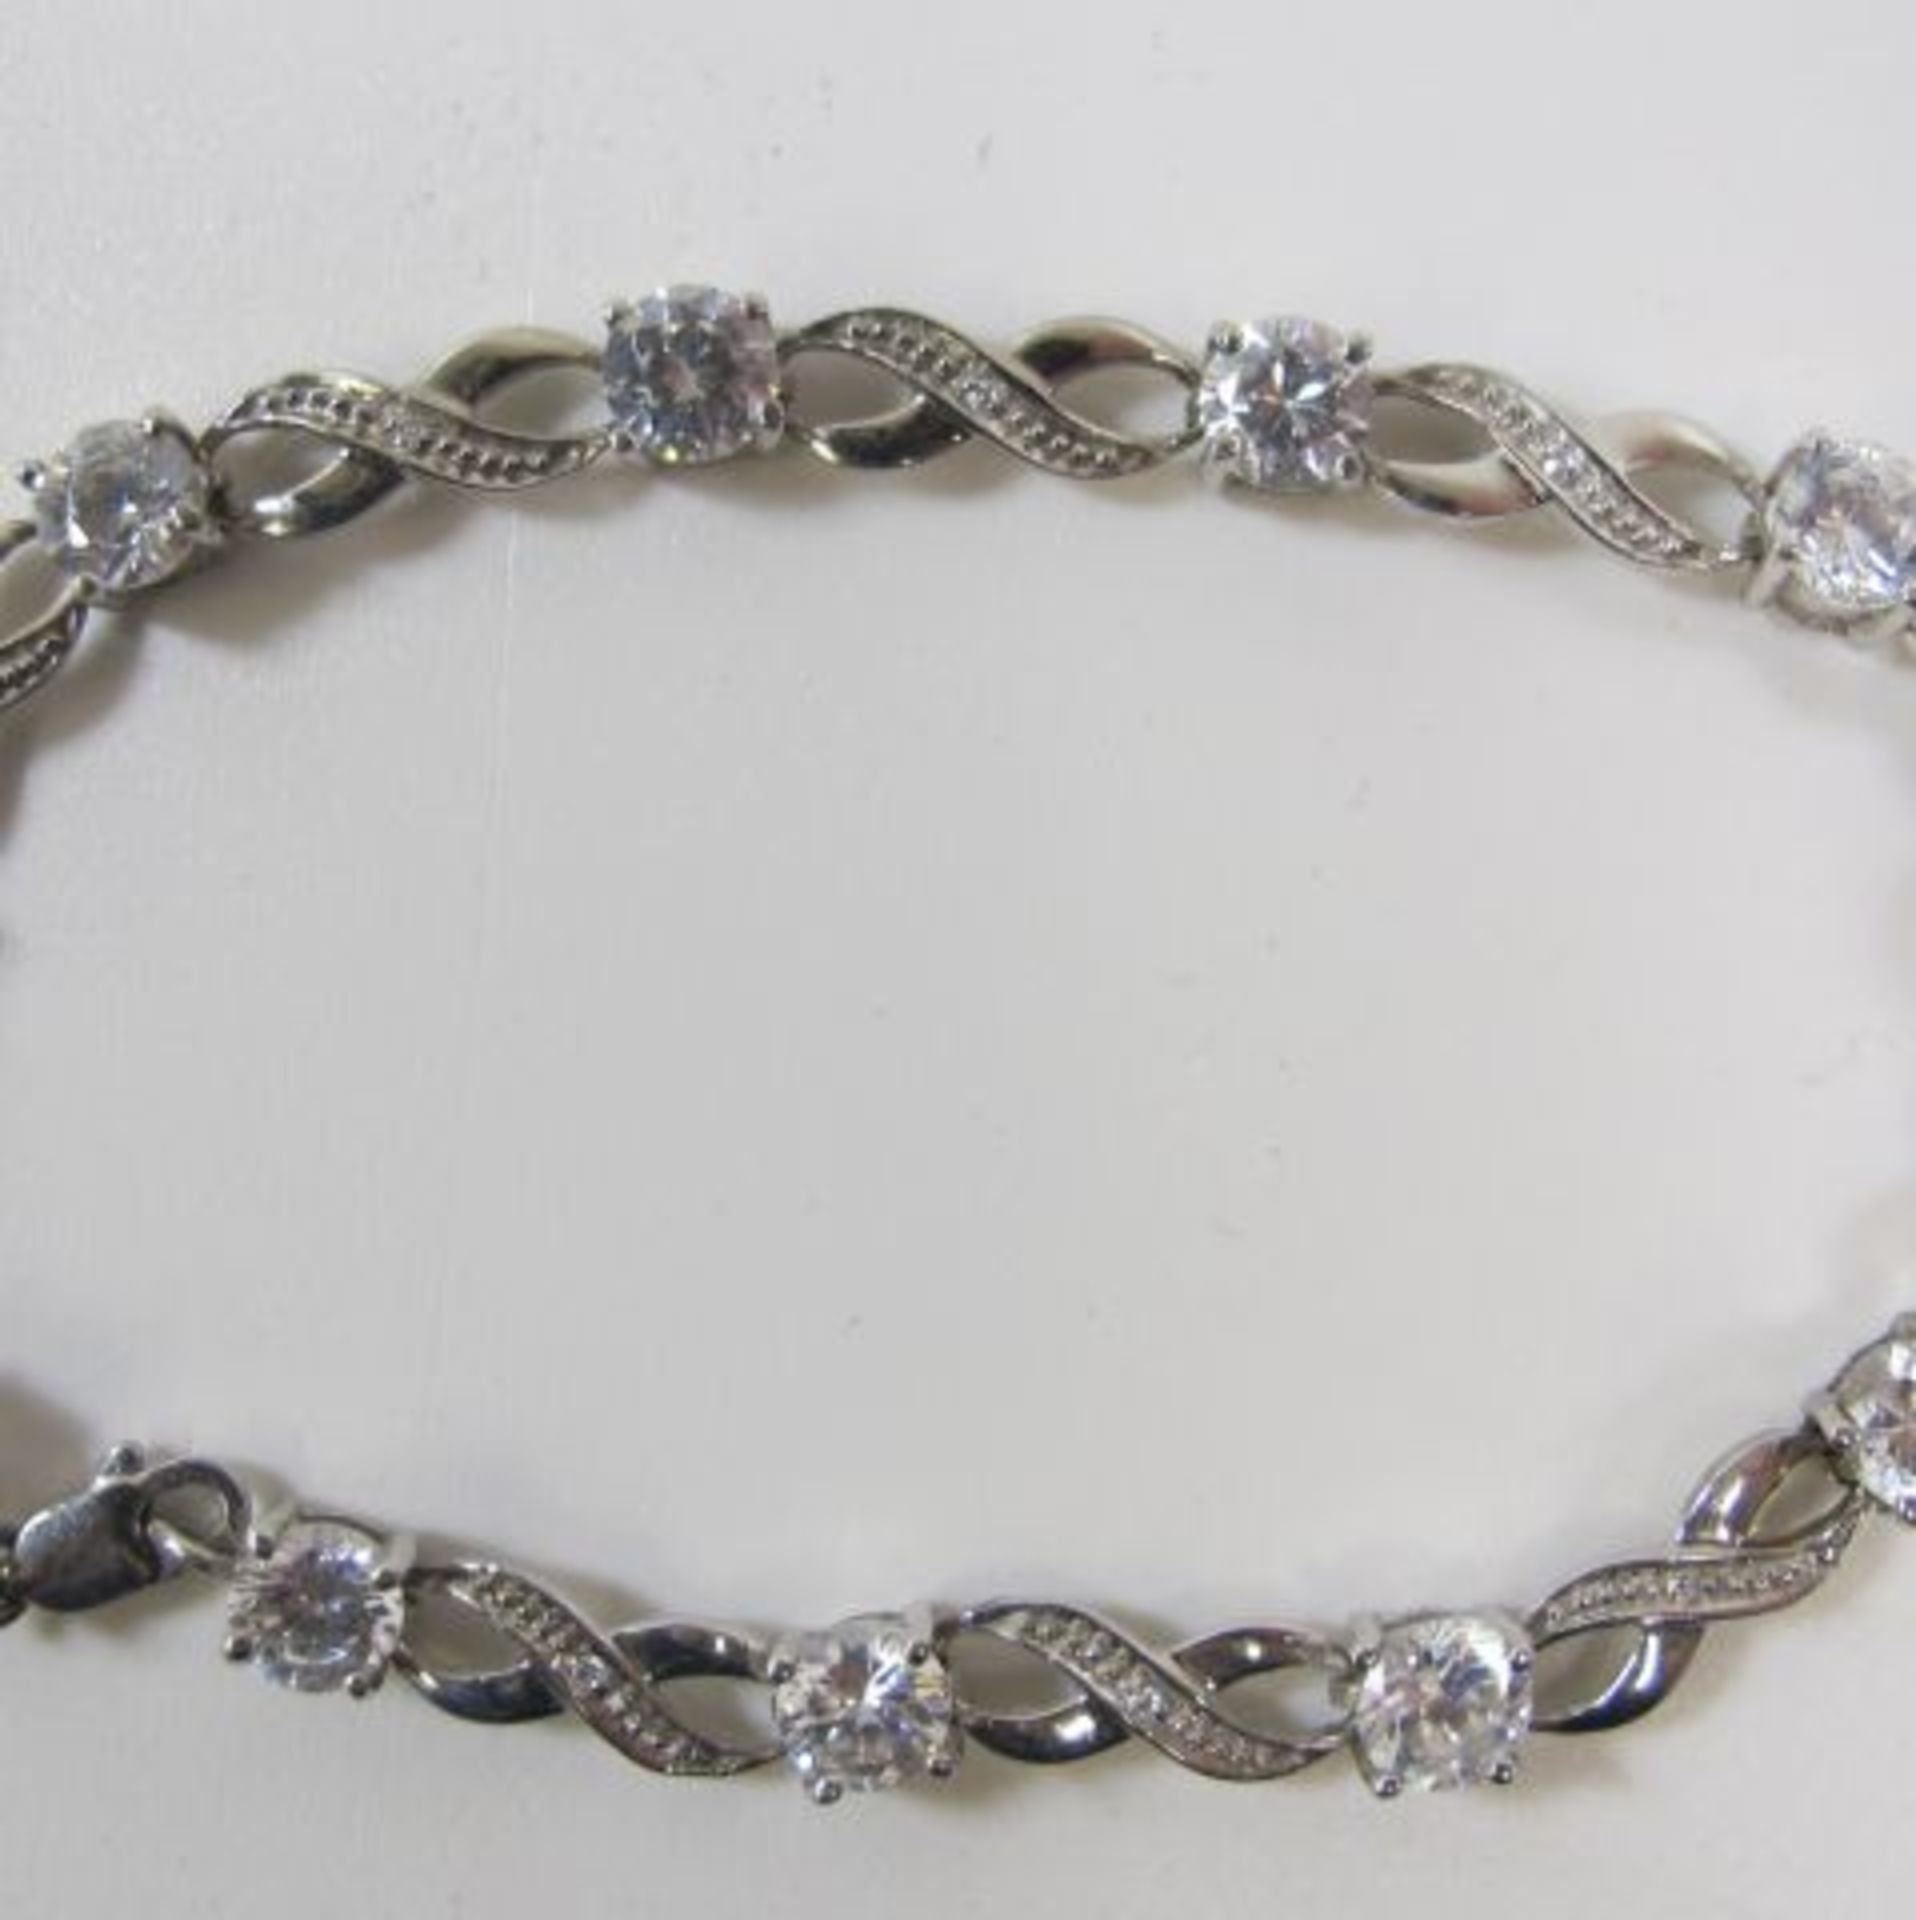 A 9ct White Gold Bracelet with Crystal Stones Diamond Set (est. £100-£150) - Image 2 of 2